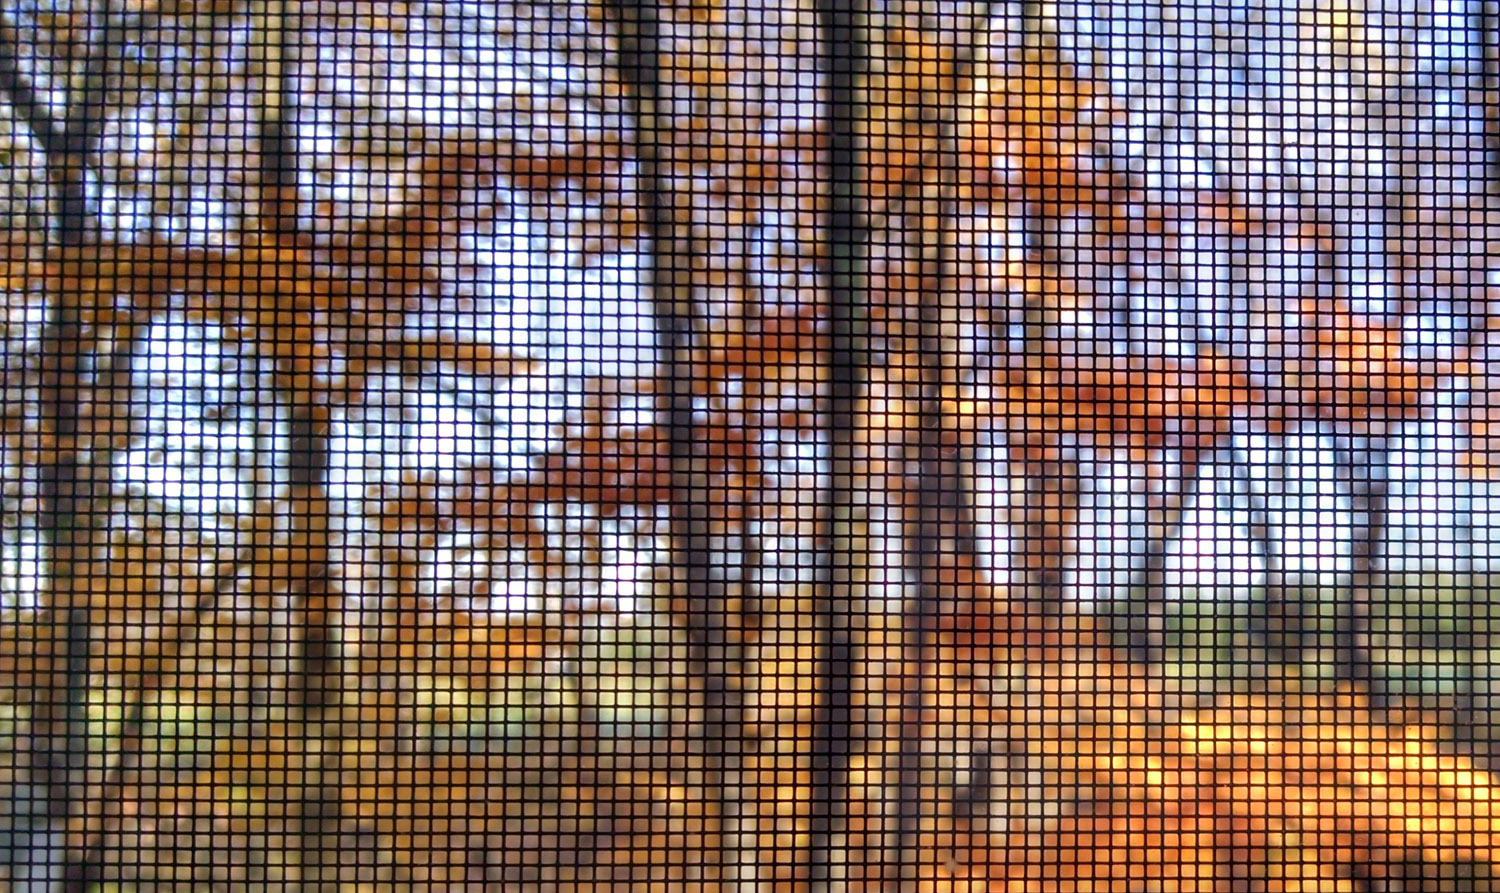 Dianne Kellogg, Fall Through the Screen, photograph, 2014